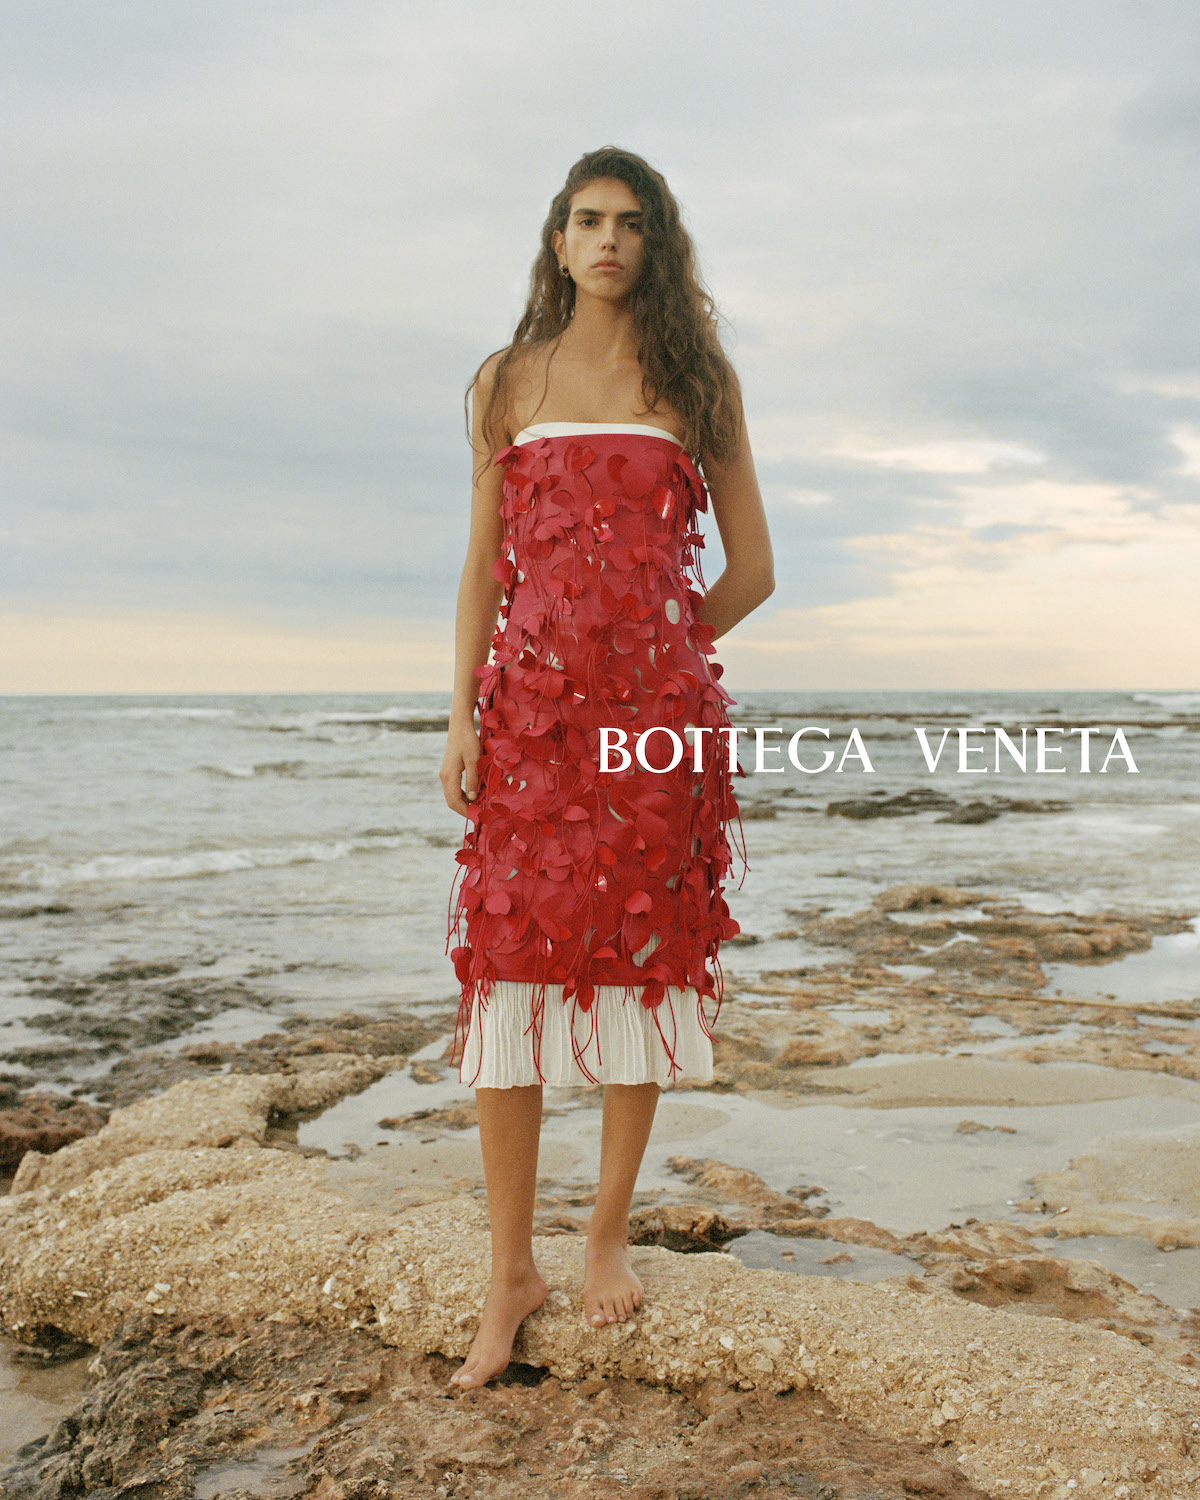 Andiamo: Bottega Veneta Gets Us Going